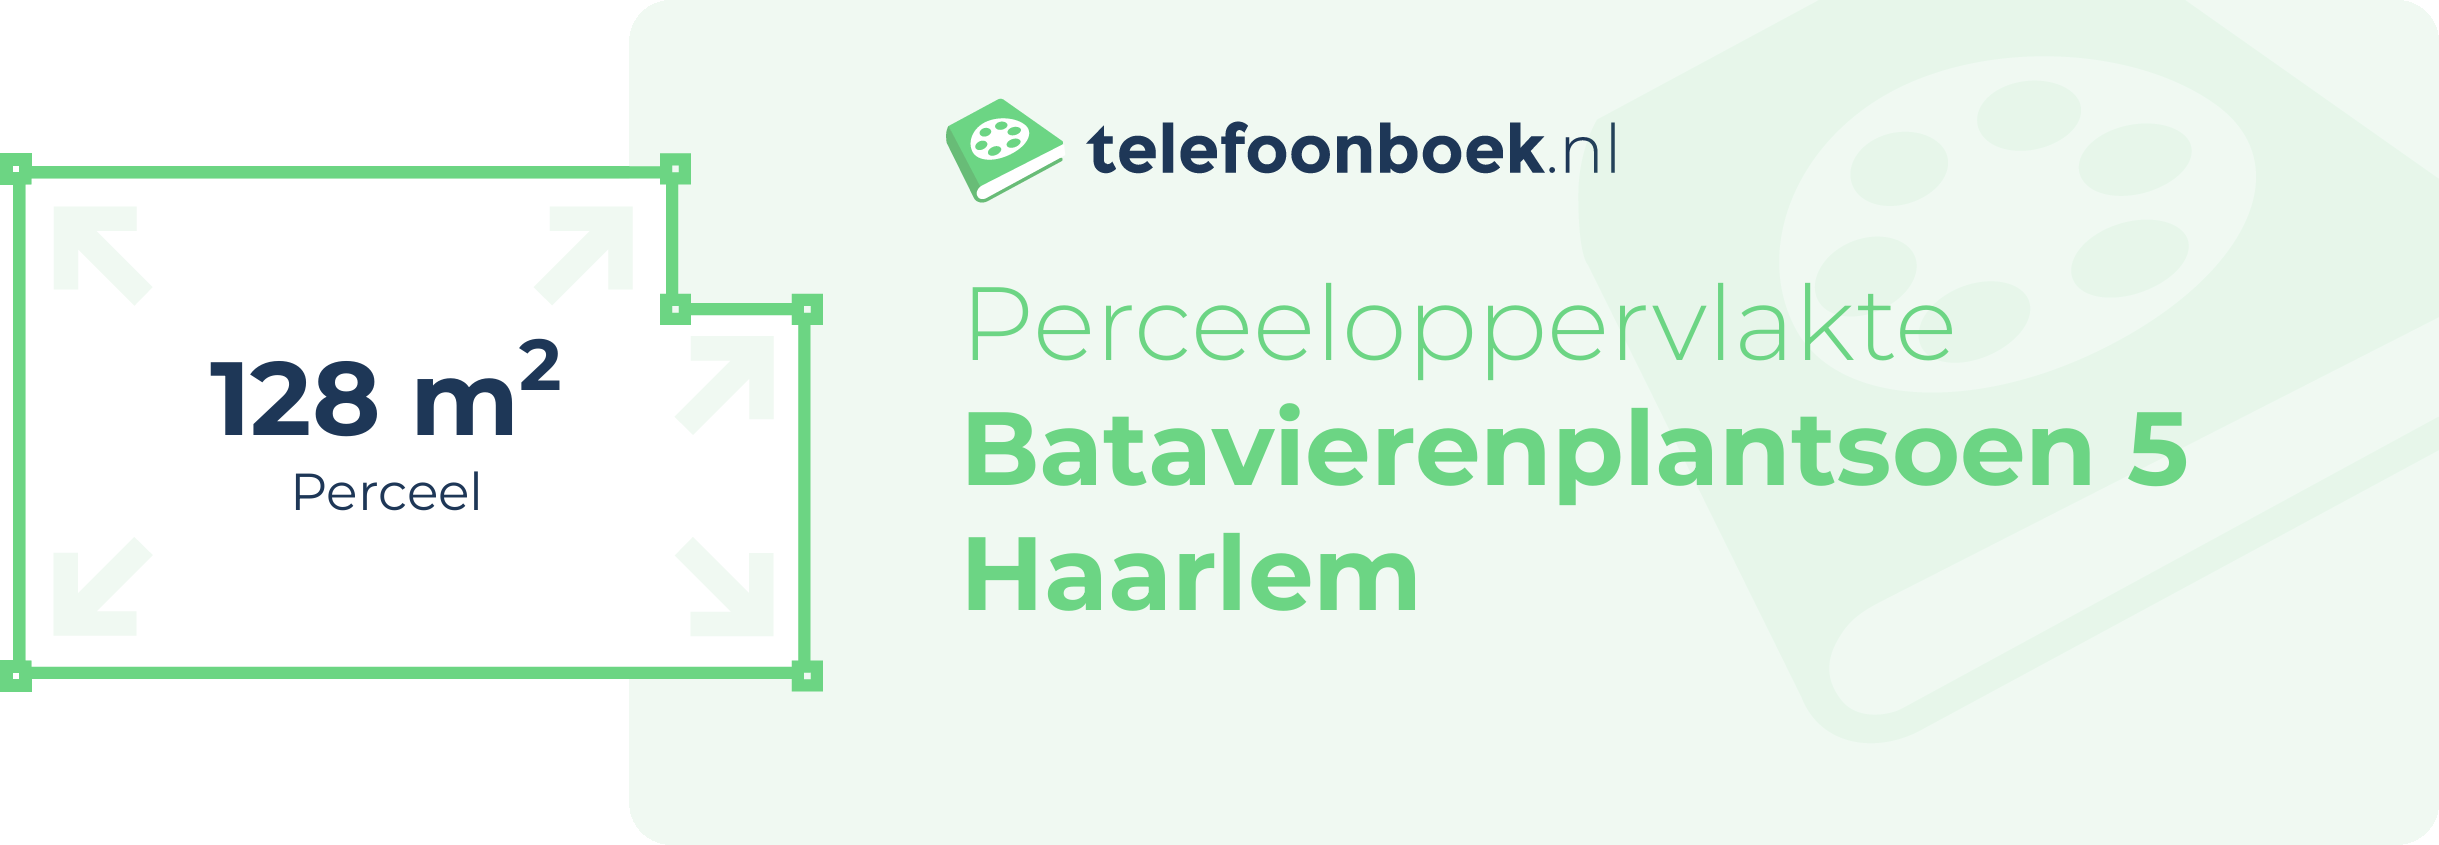 Perceeloppervlakte Batavierenplantsoen 5 Haarlem